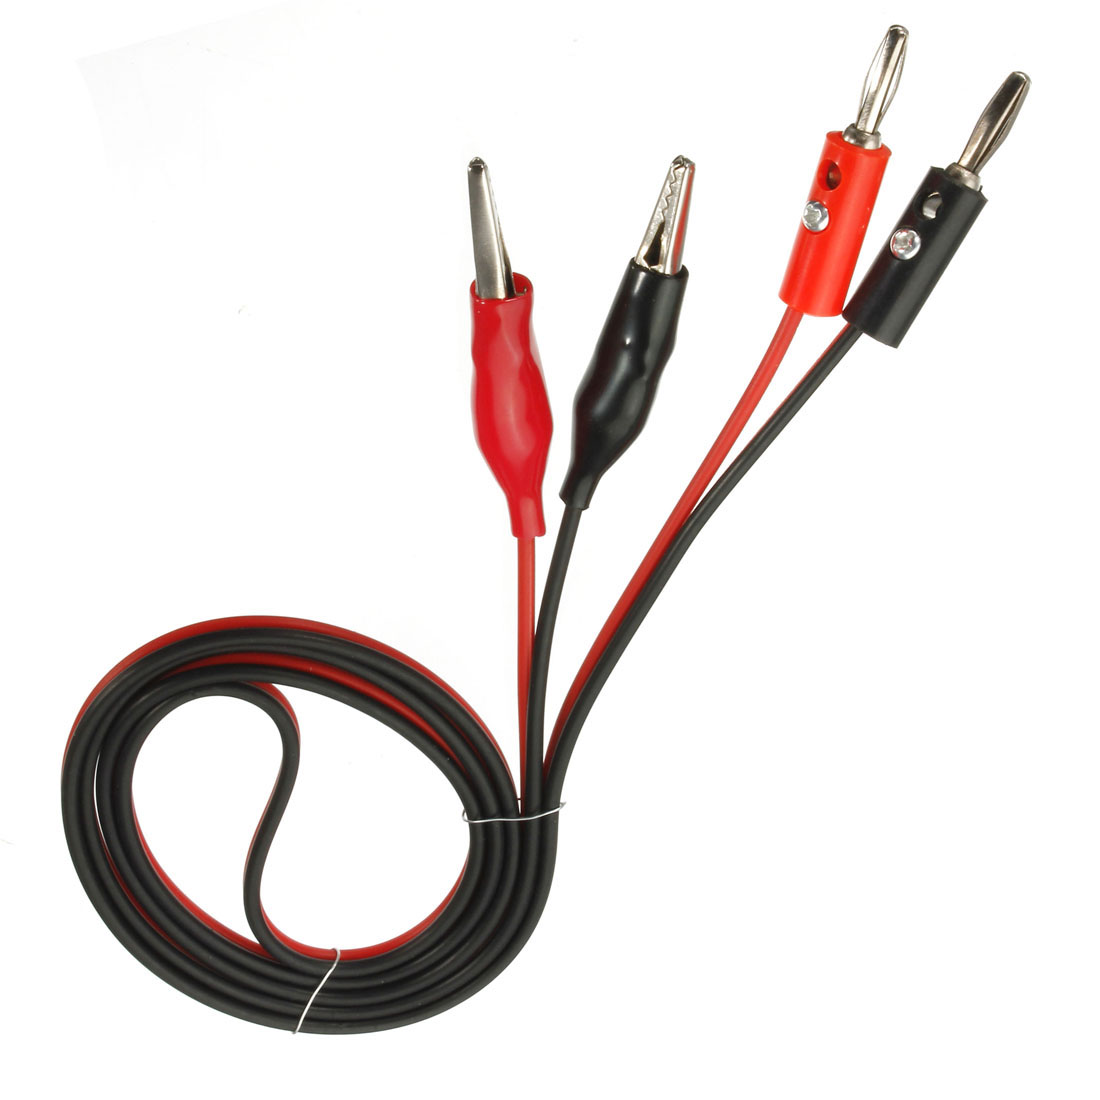 3pcs-DANIU-Alligator-Clip-Test-Lead-Clip-To-Banana-Plug-Probe-Cable-for-Multi-Meters-1361936-2